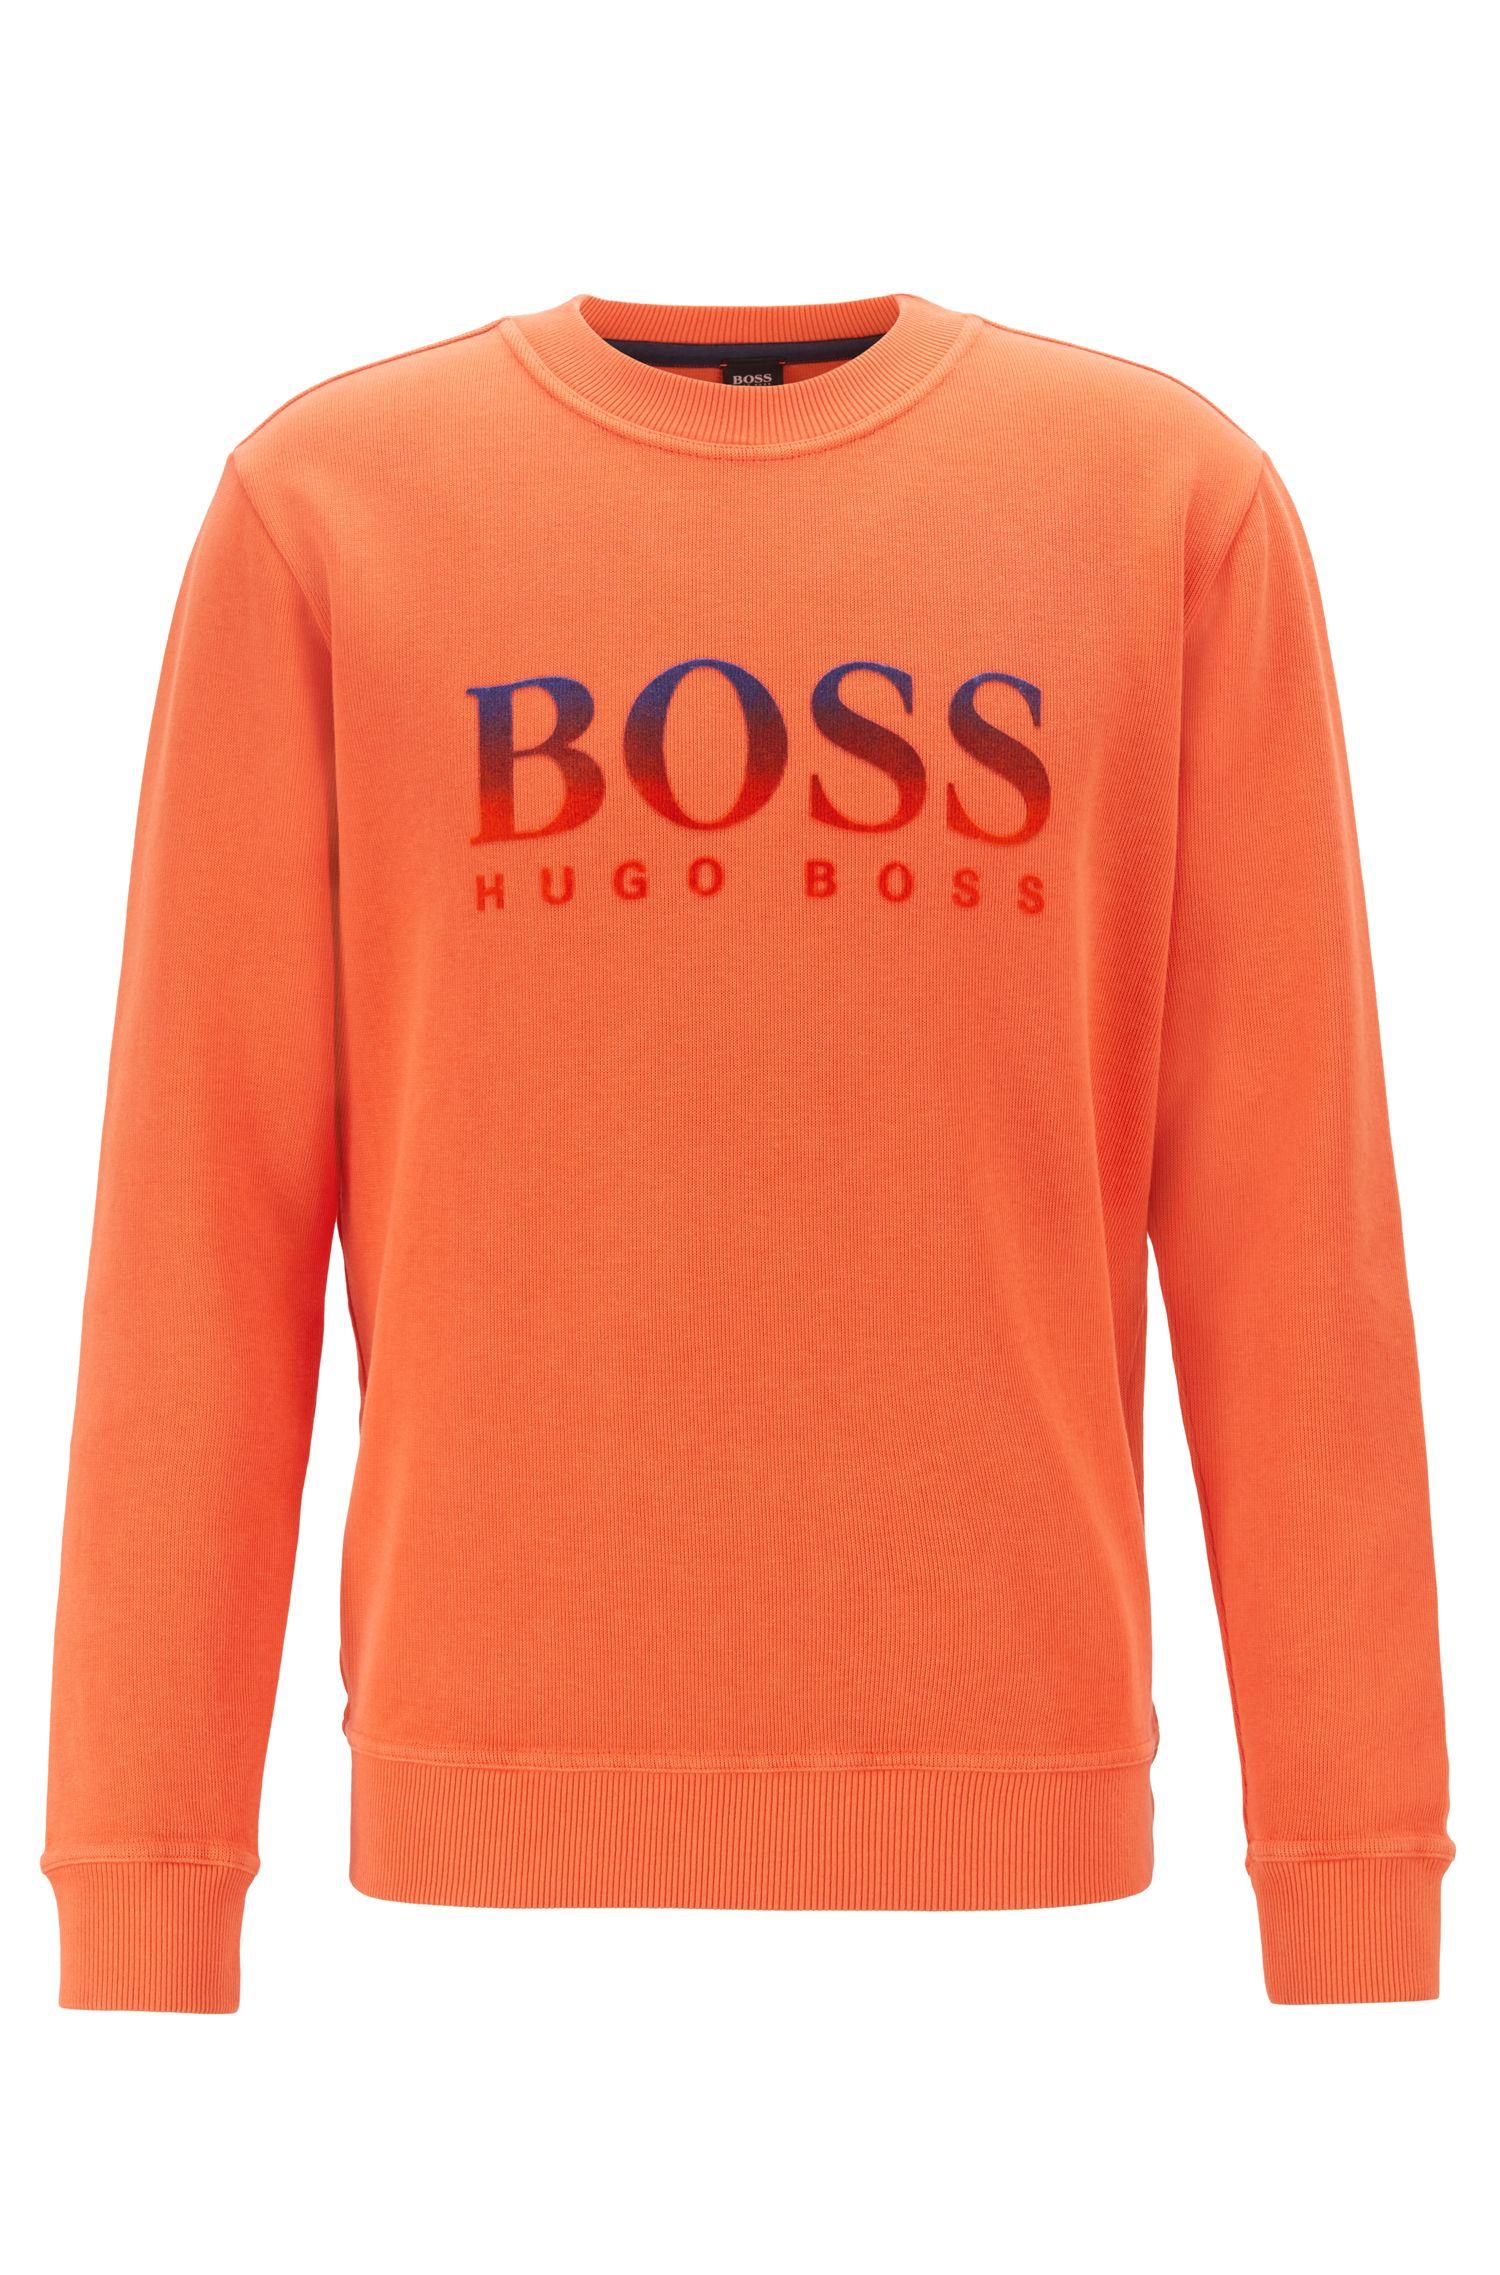 Hugo Boss Sweatshirt Orange Shop, 57% OFF | www.sirjan-tractor.com